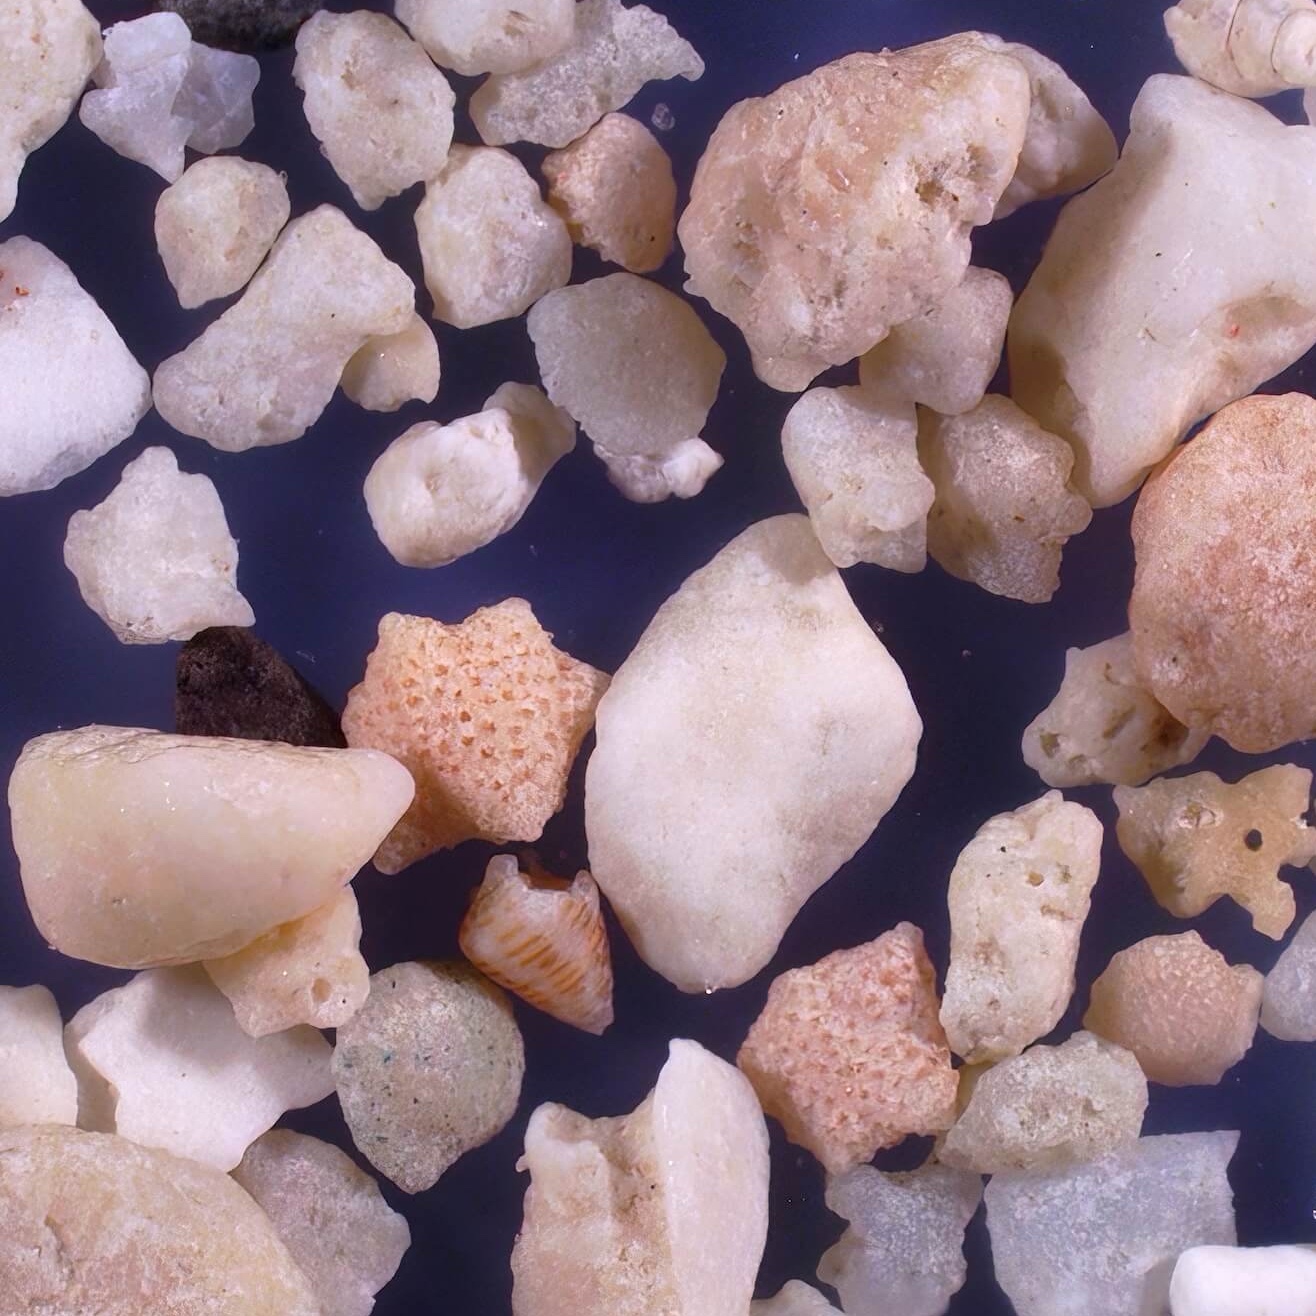 Sq1 Kondoi Beach Taketomi Island Okinawa Japan Sand Grains Magnified Under Microsope 2